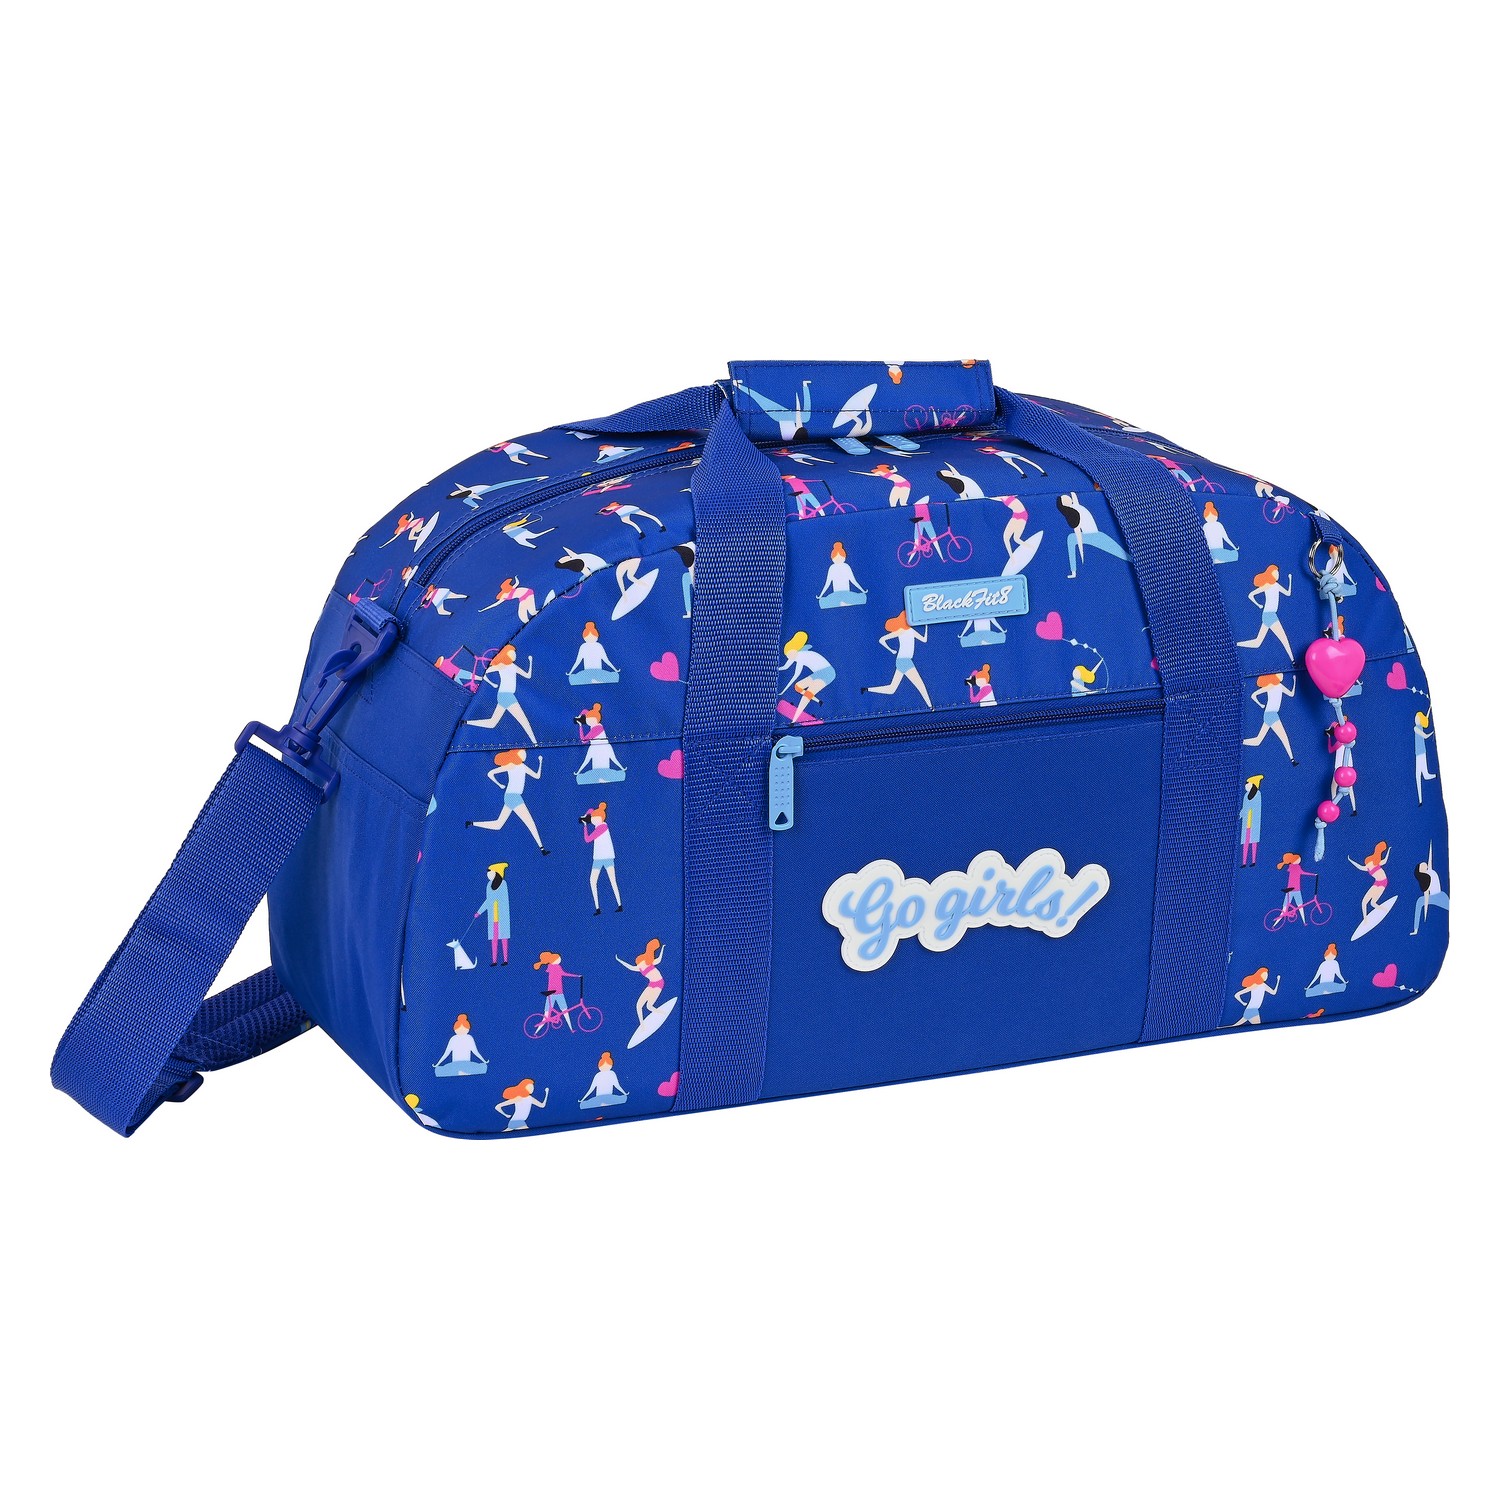 Sports bag BlackFit8 Go Girls Blue (50 x 26 x 20 cm)